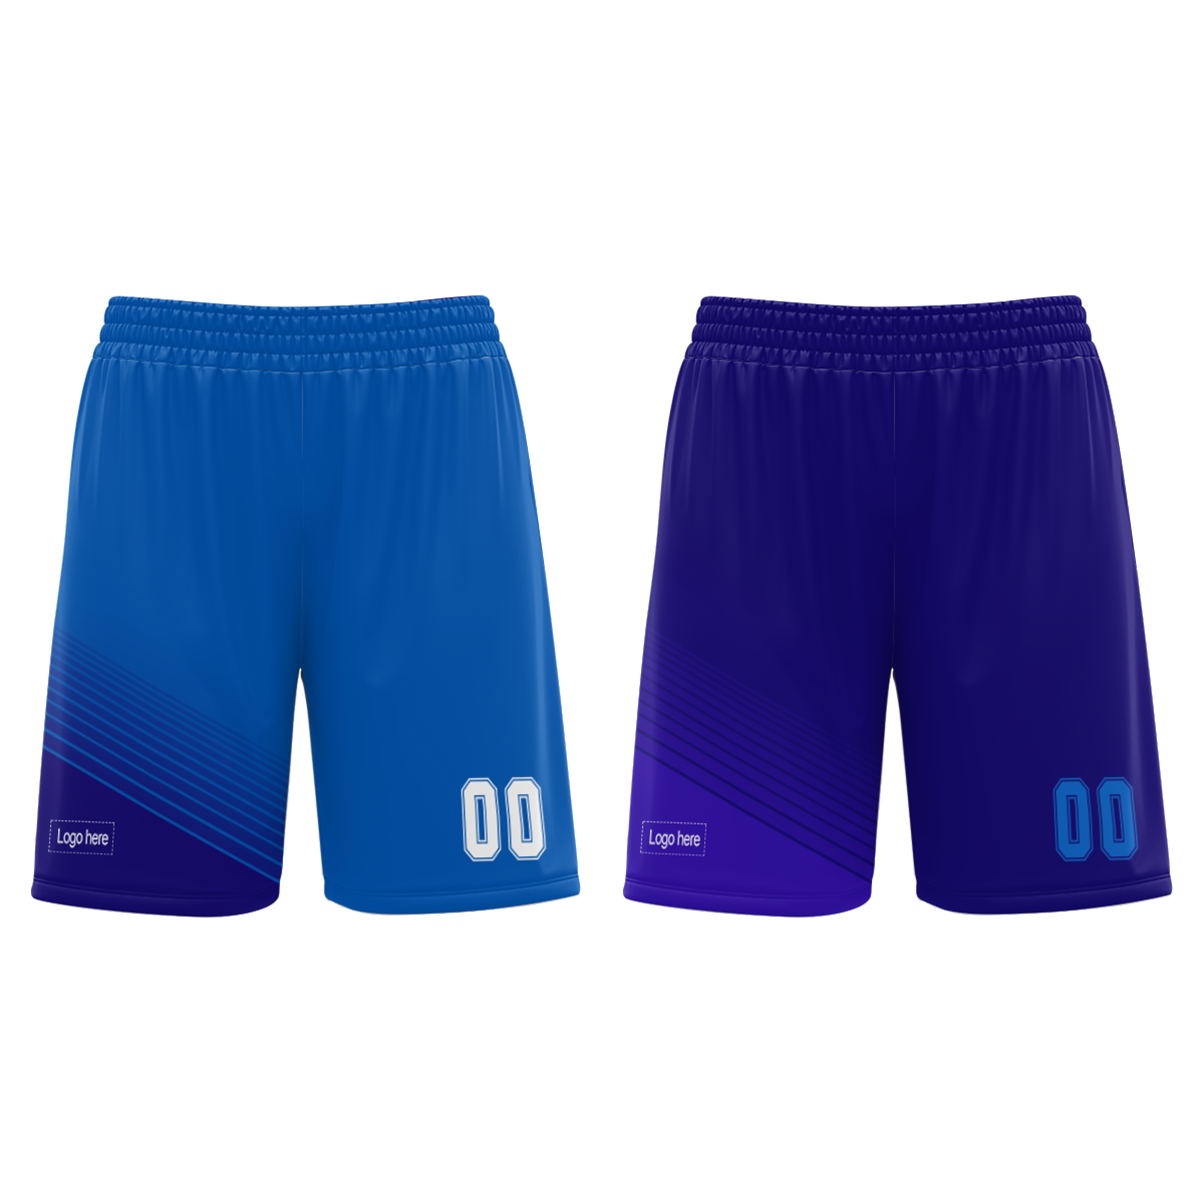 custom-basketball-jerseys-fashion-design-printing-sleeve-college-reversible-basketball-shirts-clothes--at-cj-pod-7